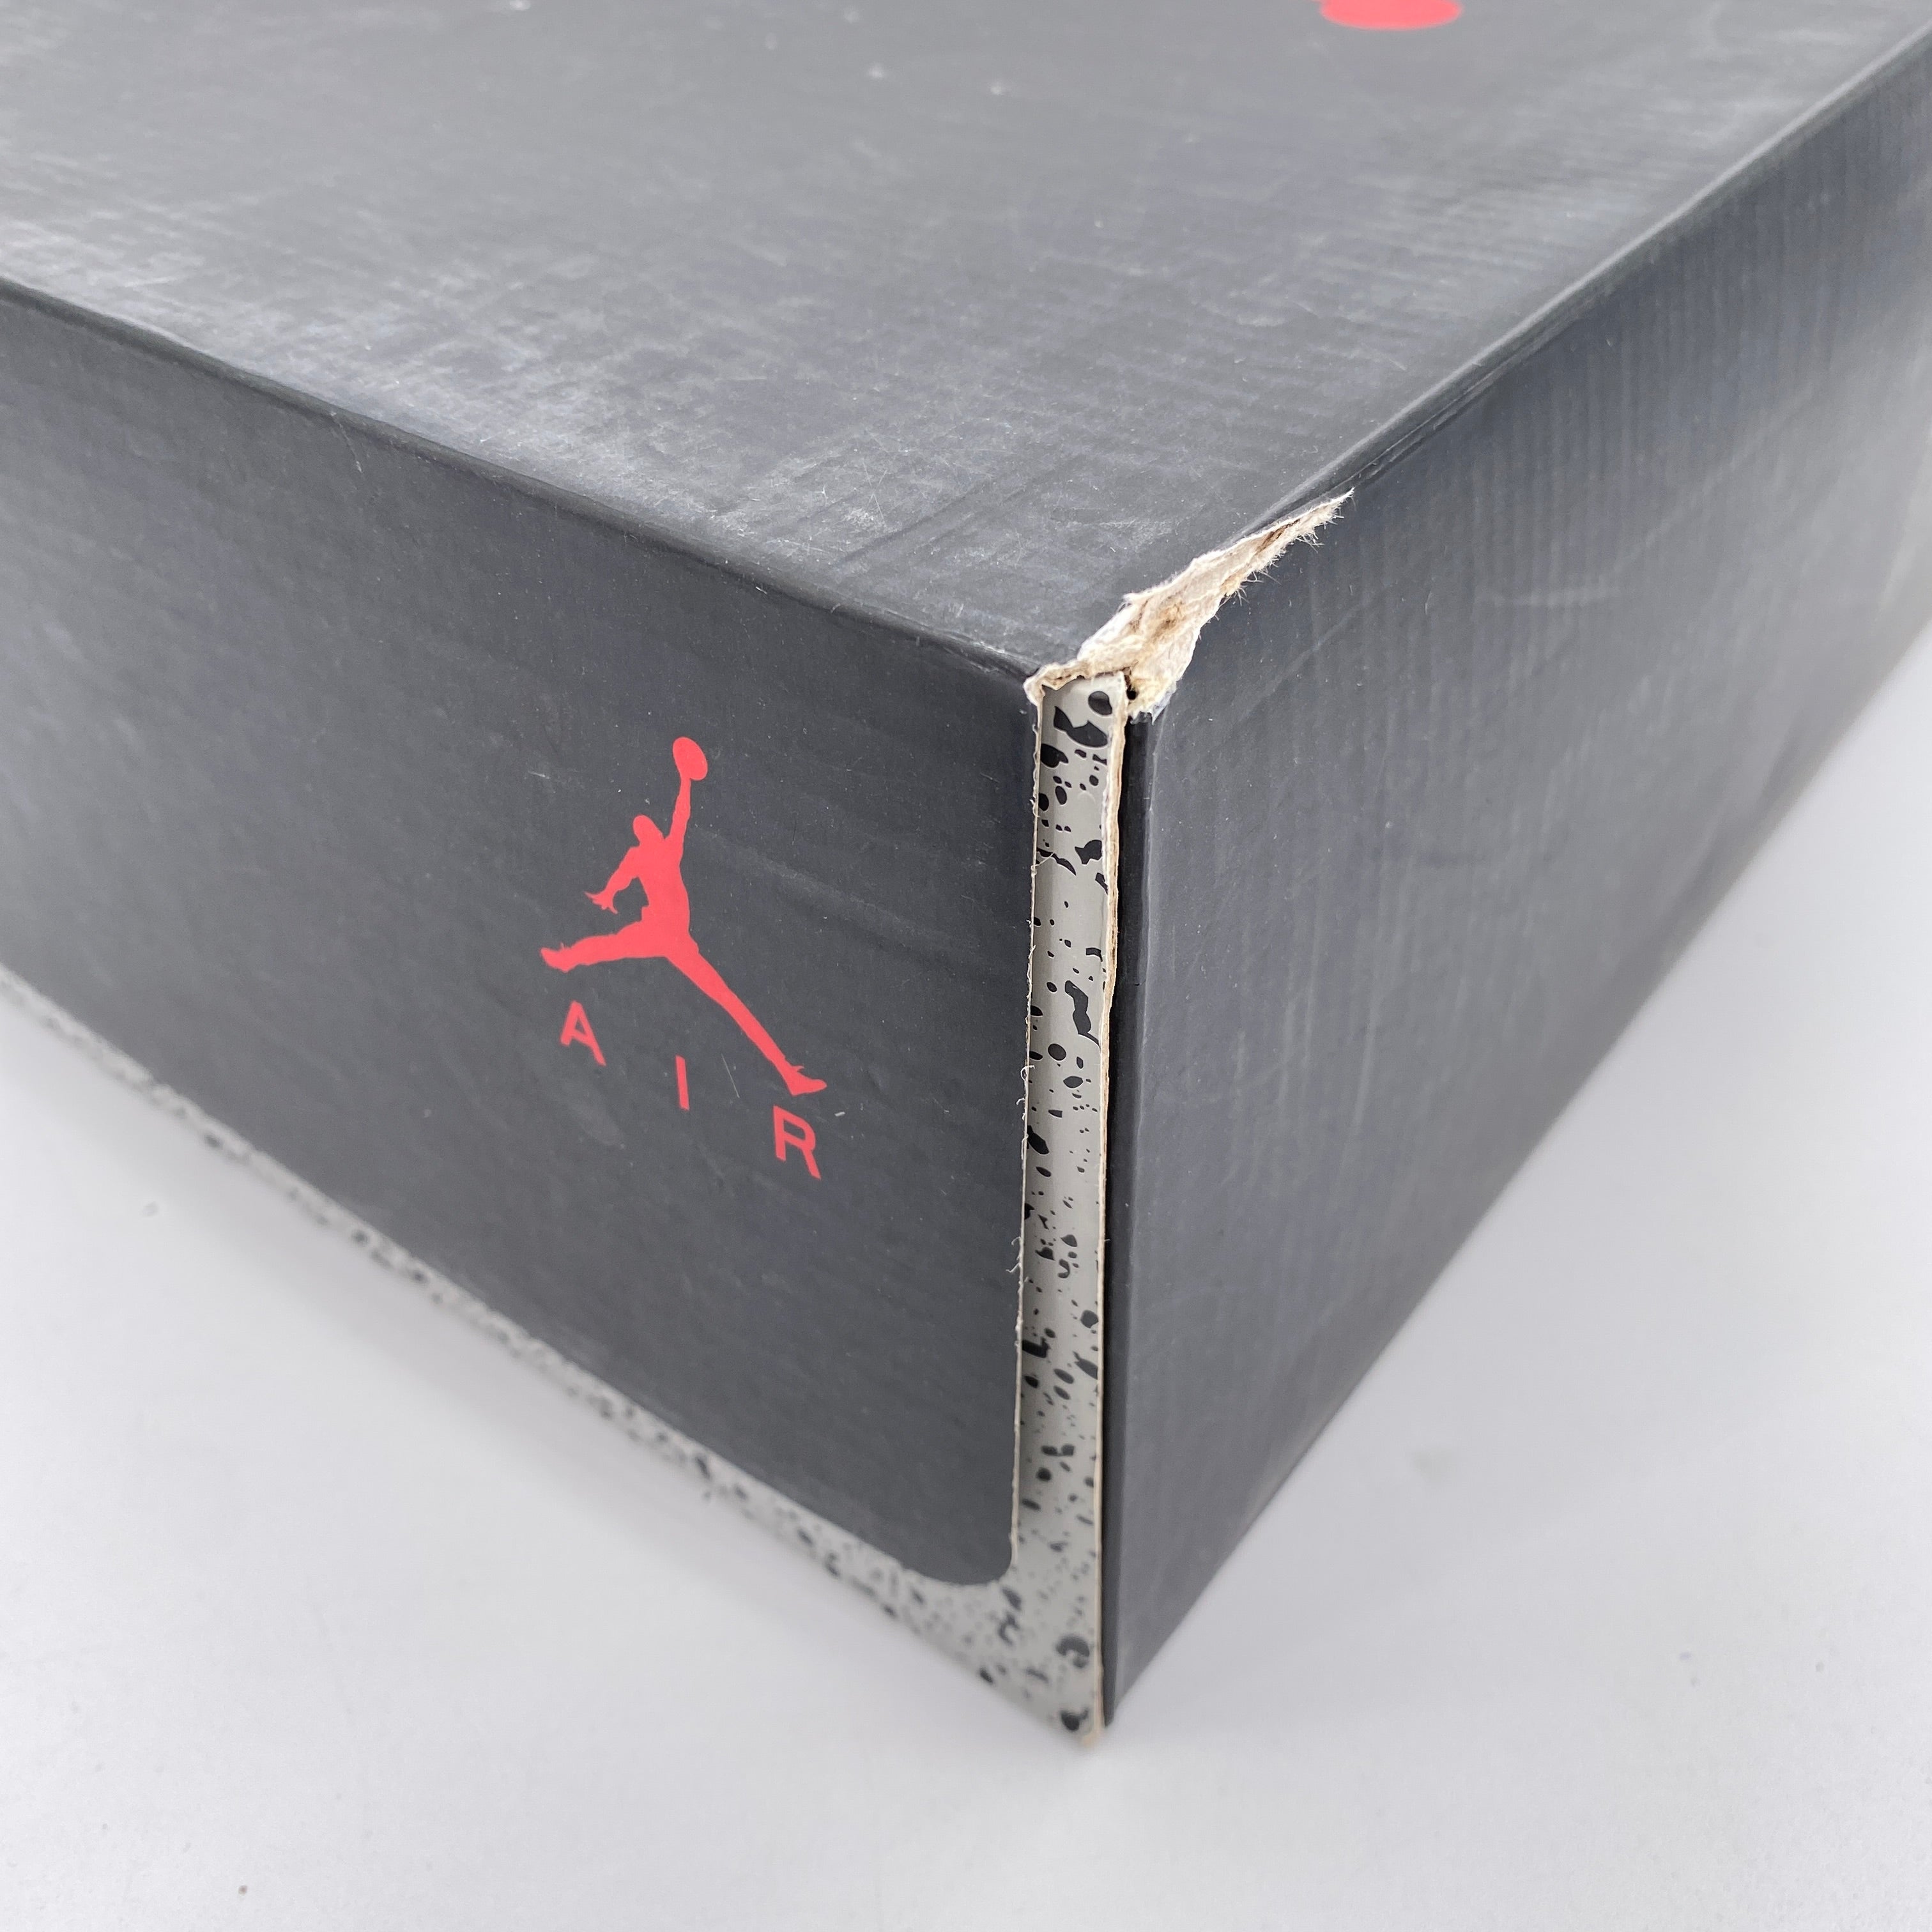 Air Jordan 5 Retro "Blue Suede" 2017 New Size 10.5